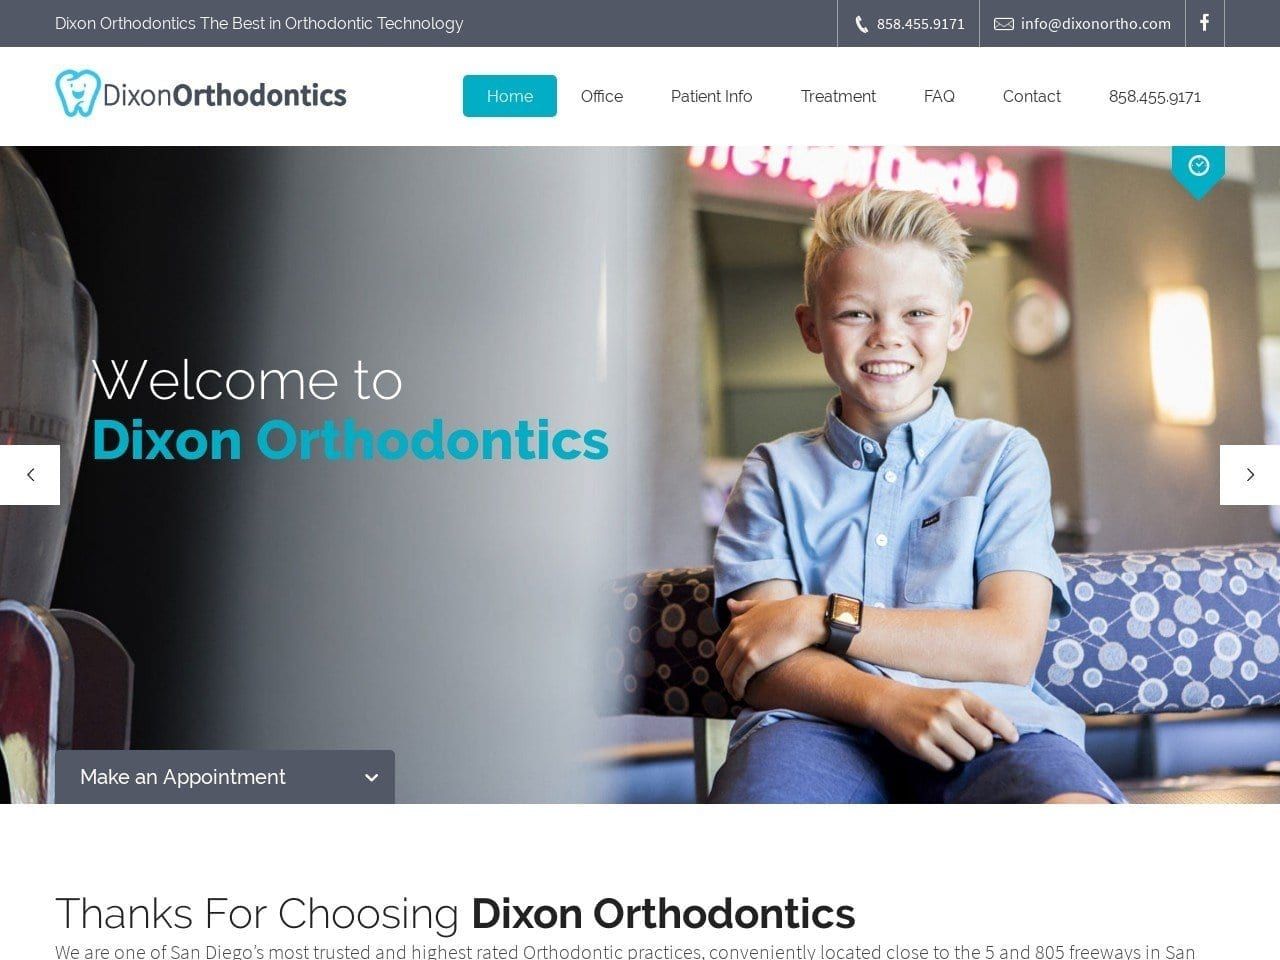 Dixon Orthodontics Website Screenshot from dixonortho.com